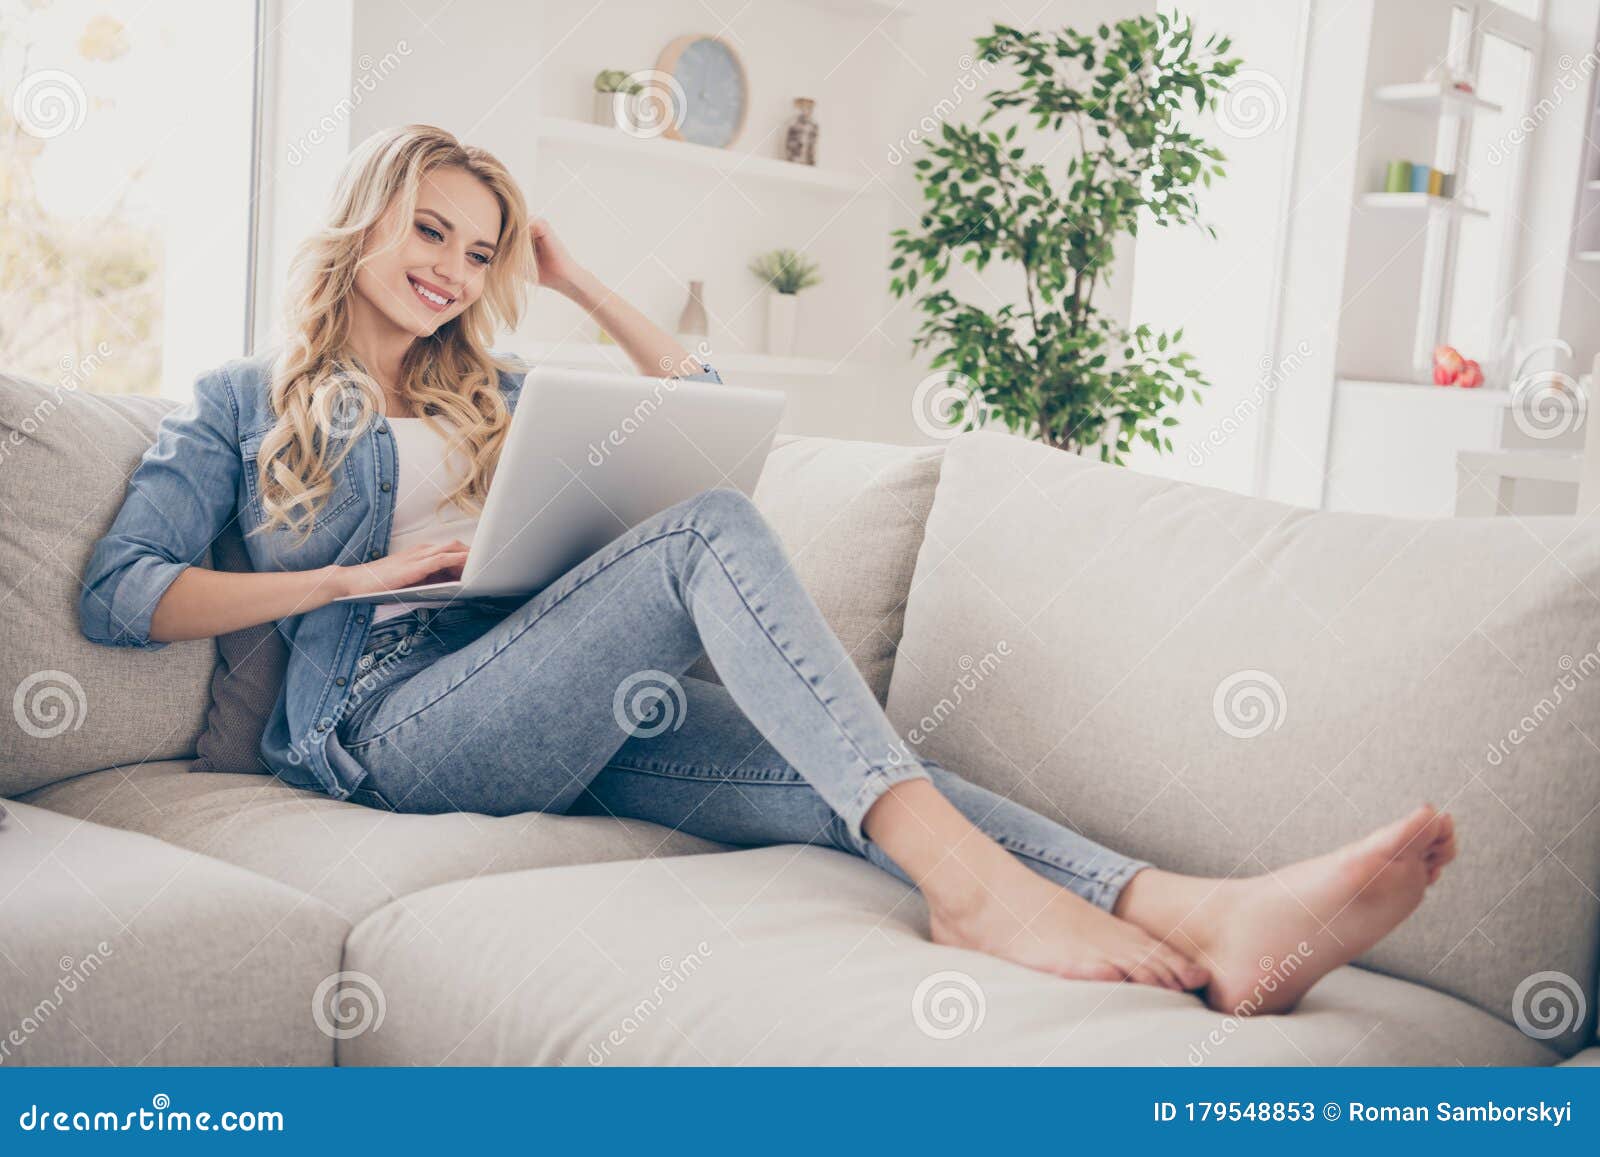 Profile Photo of Beautiful Charming Barefoot Lady Relaxing Lying